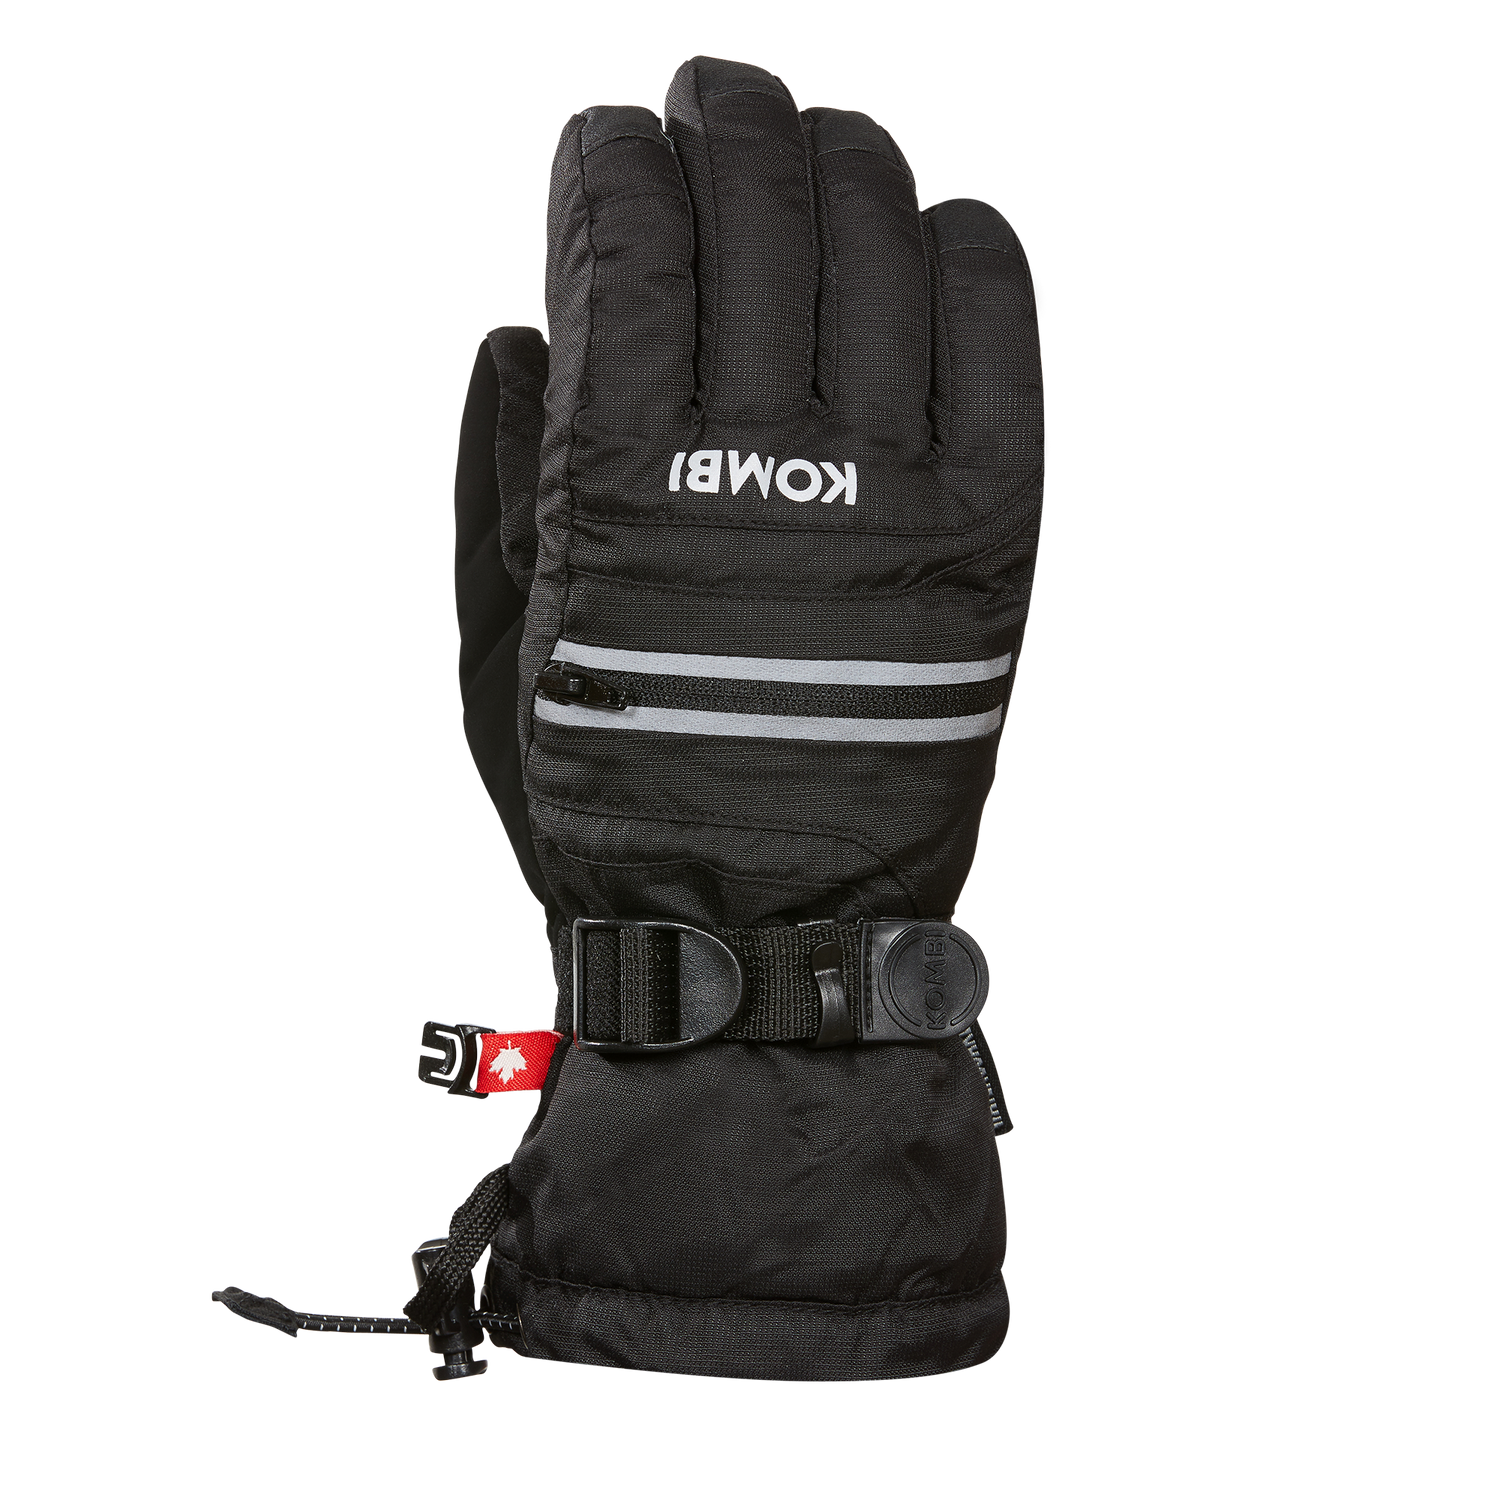 The Yolo Junior Glove